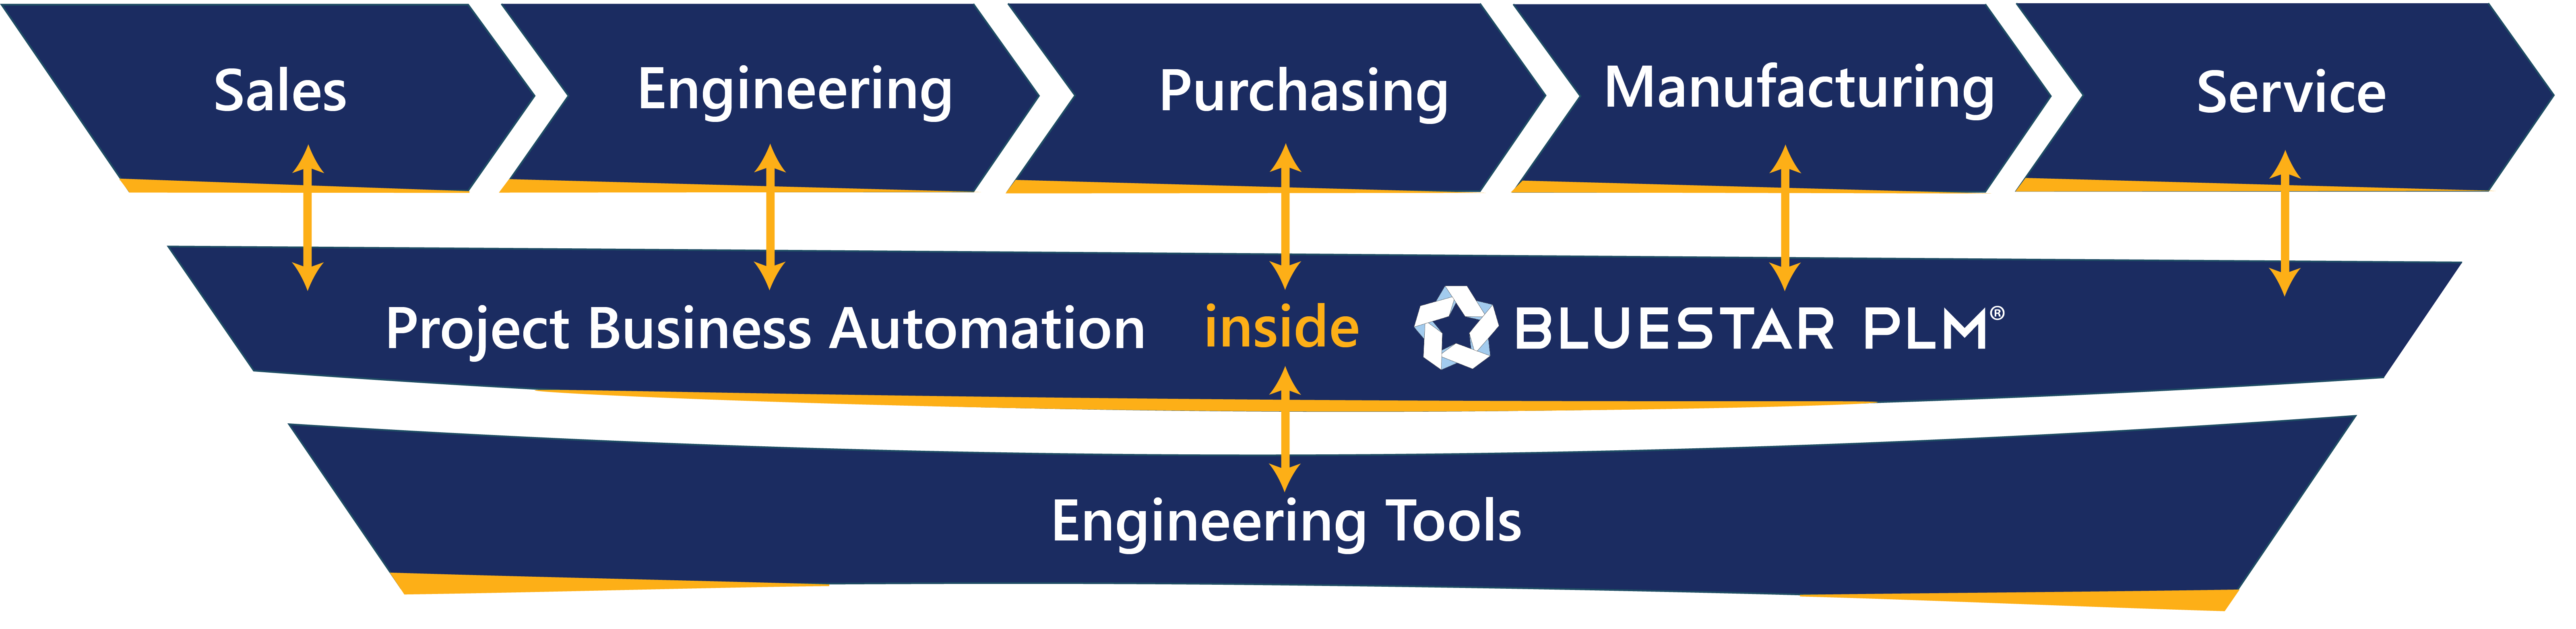 BluestarPLM Integrations Project Business Automation 1